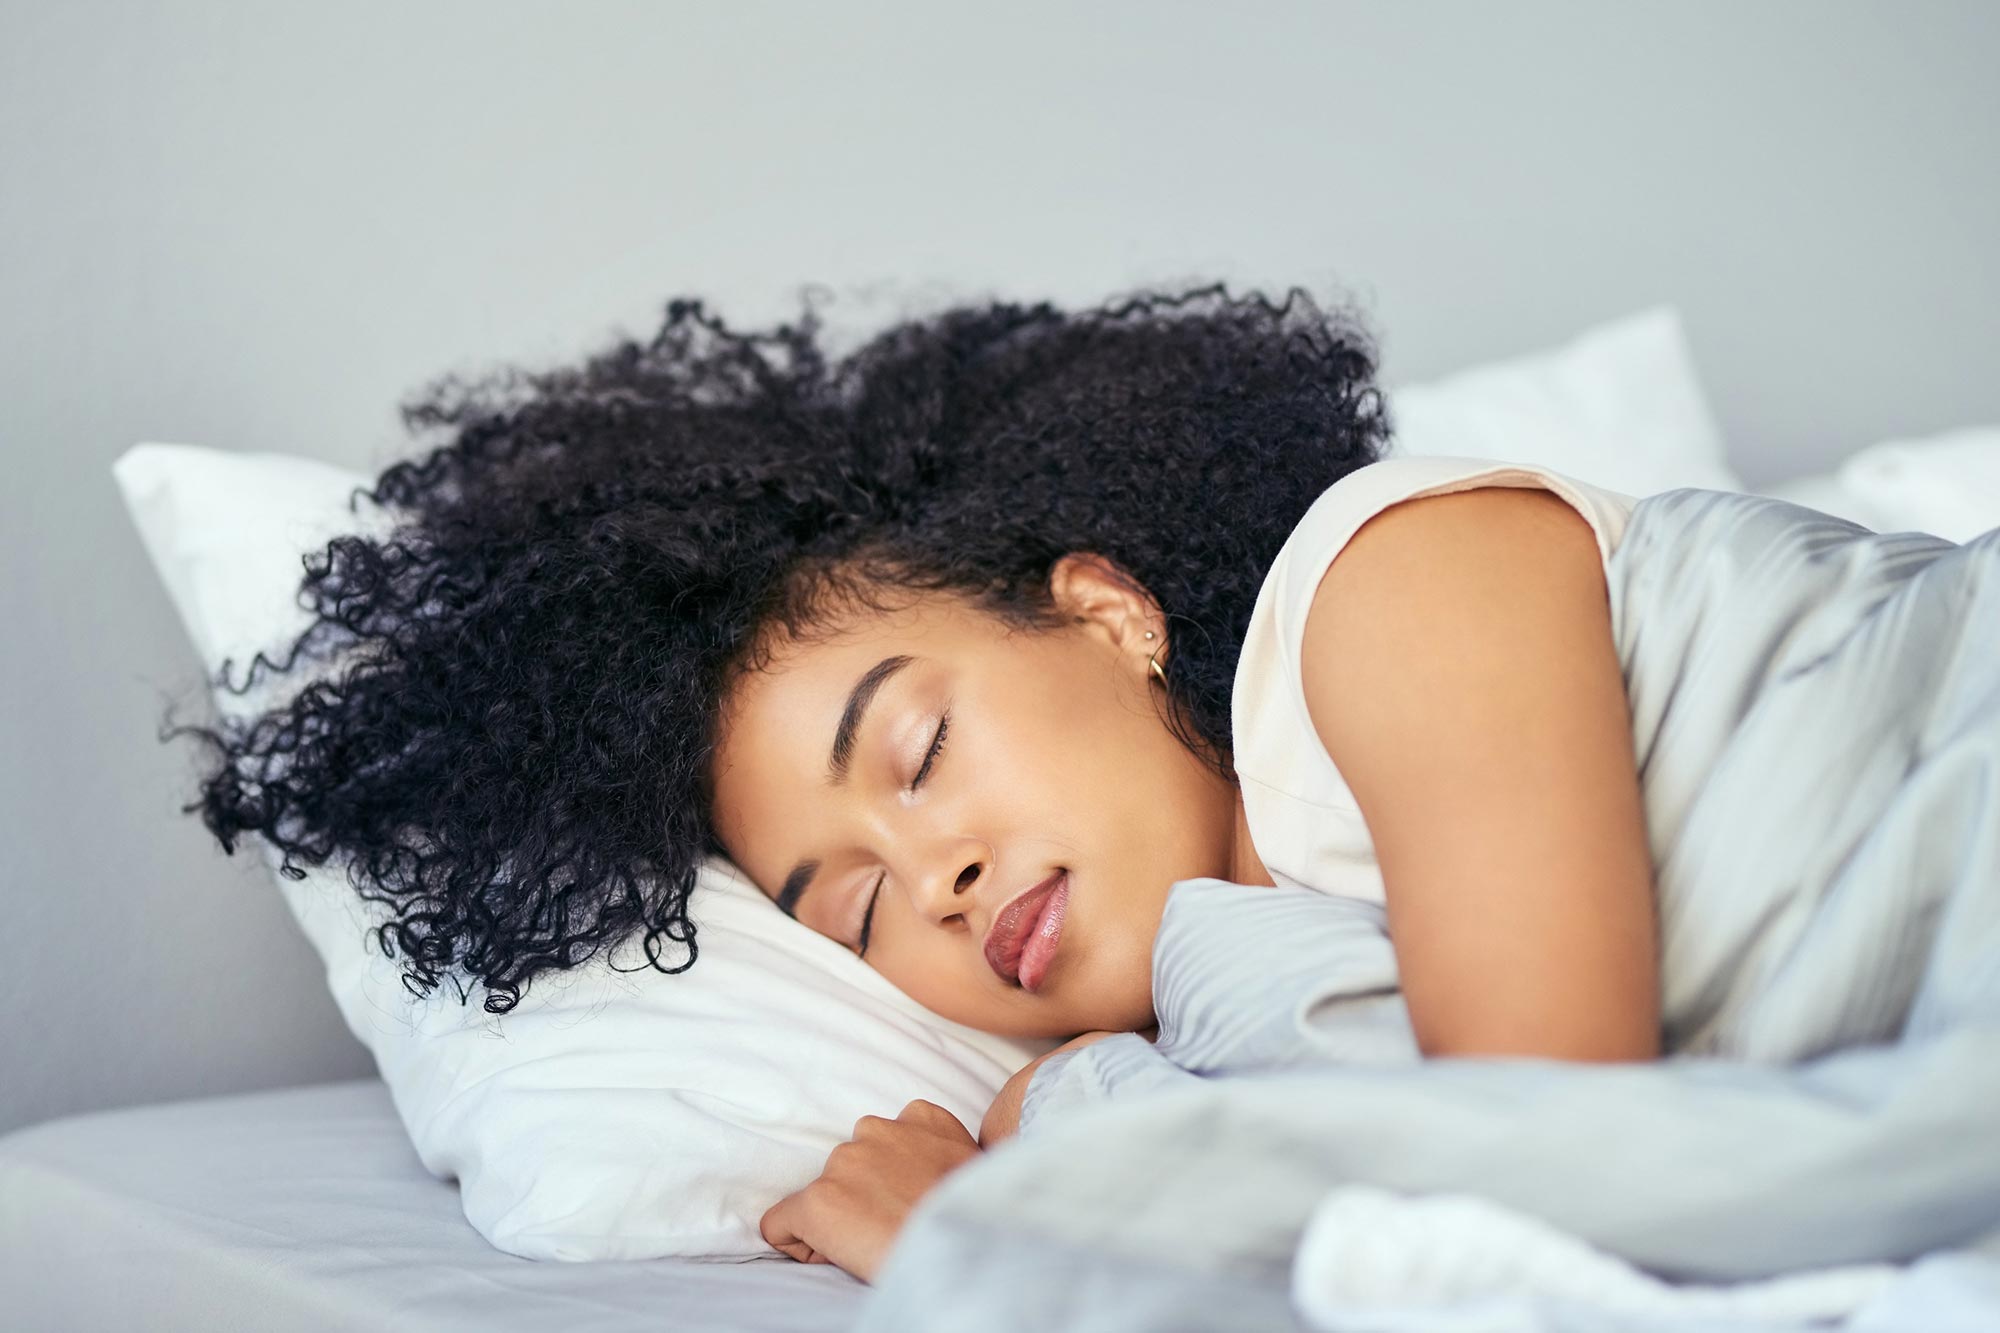 7 Tips to Improve Your Sleep Quality